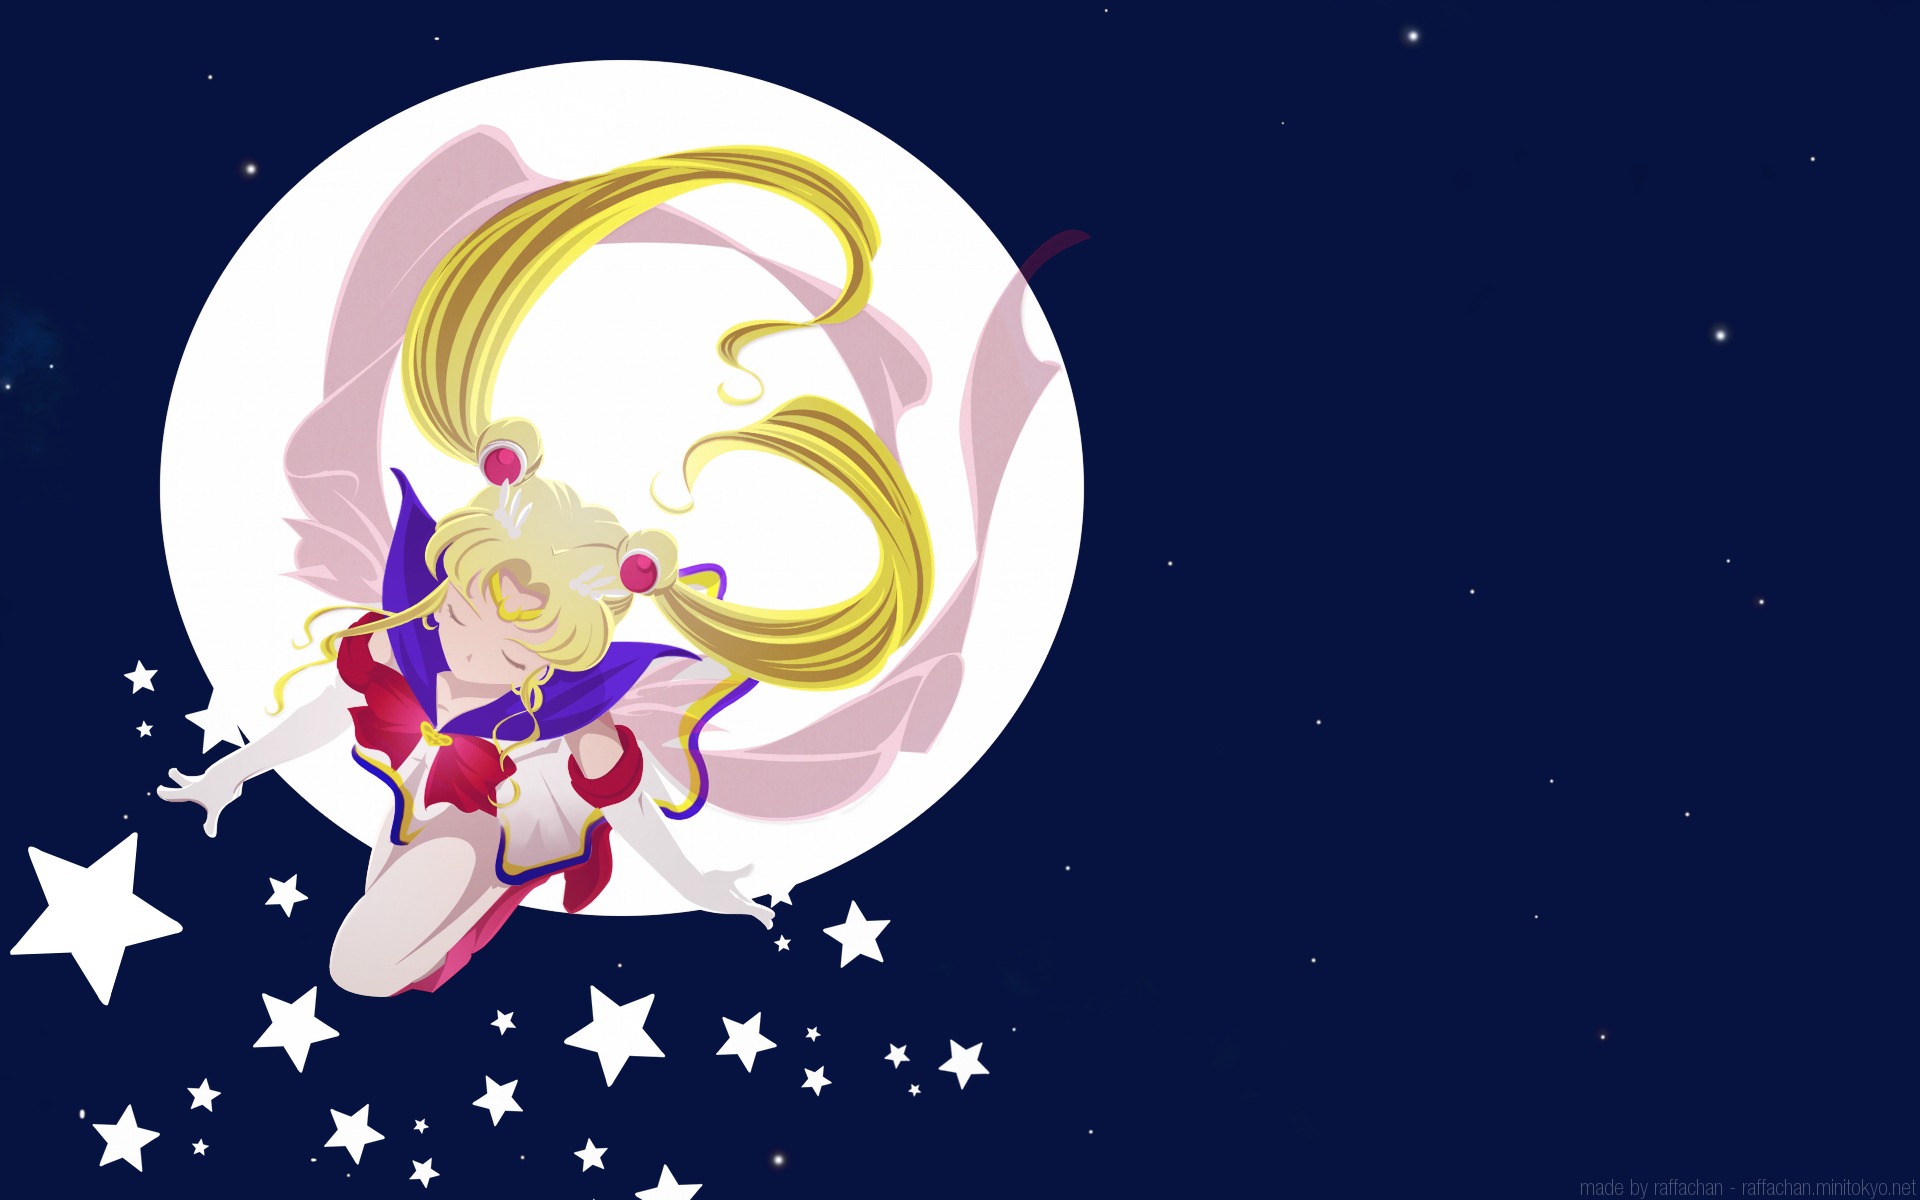 Sailor Moon Wallpaper - Album on Imgur